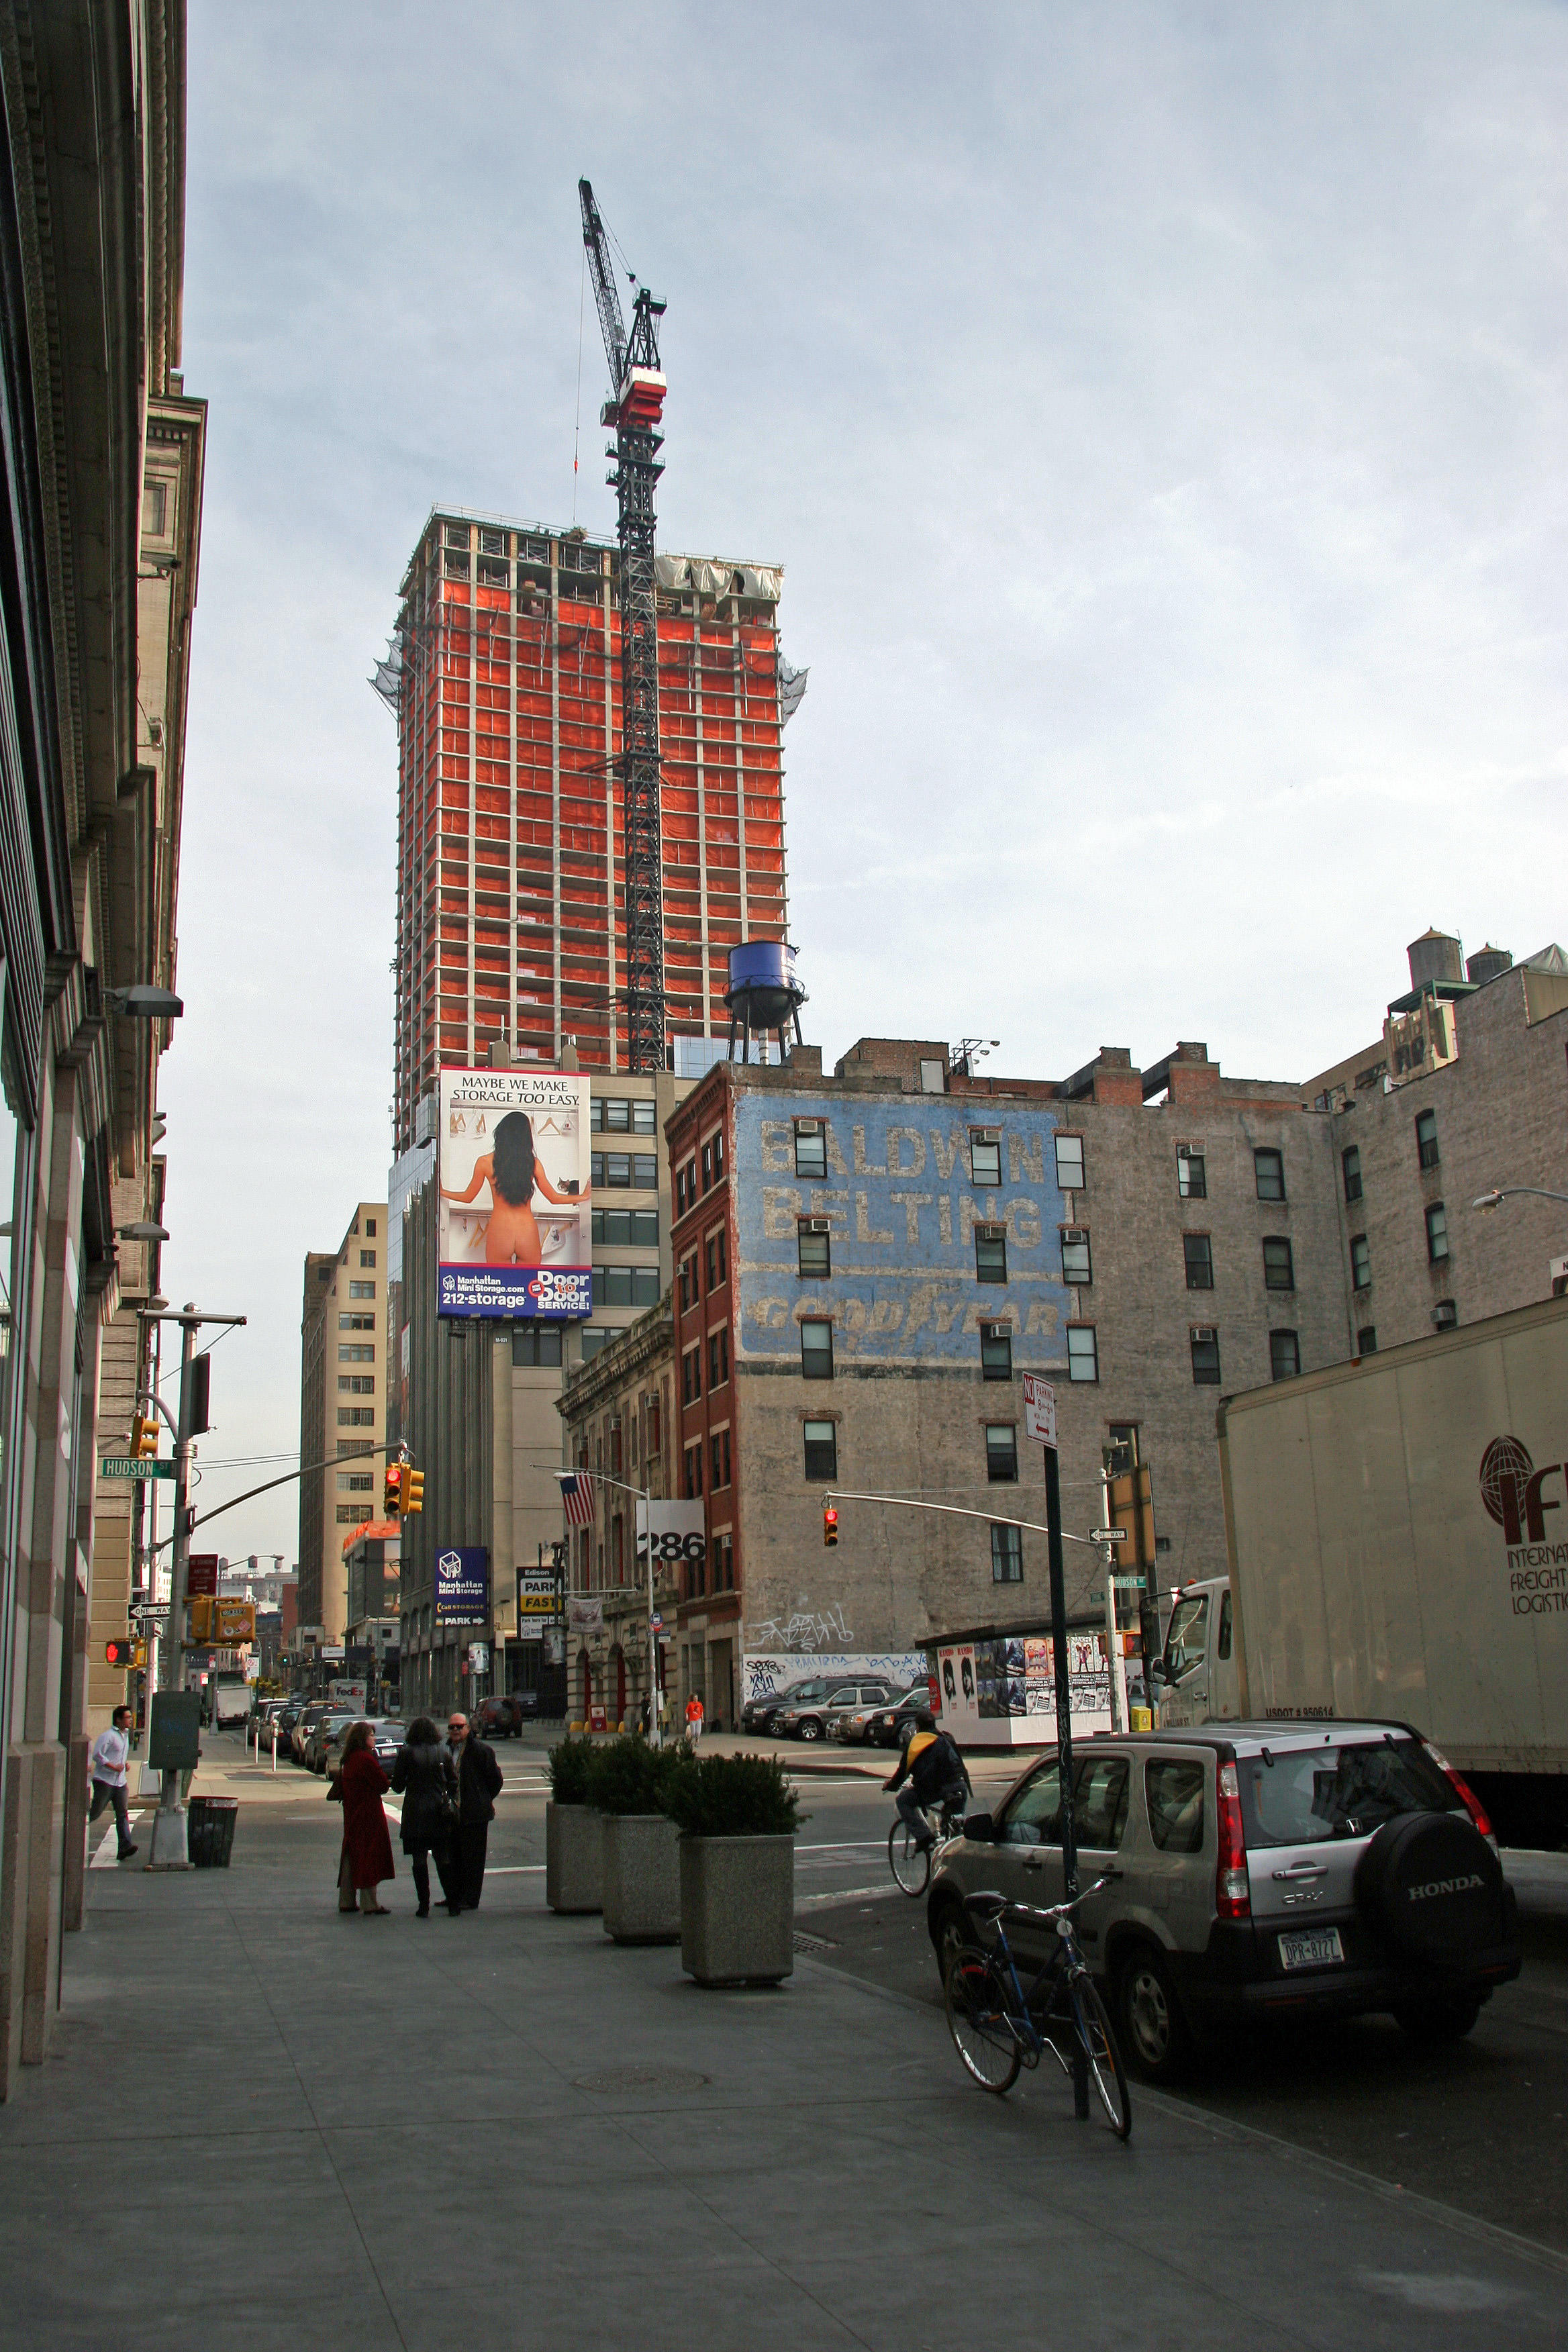 Trump SOHO Hotel/Condo Tower & Manhattan Mini Storage Billboard